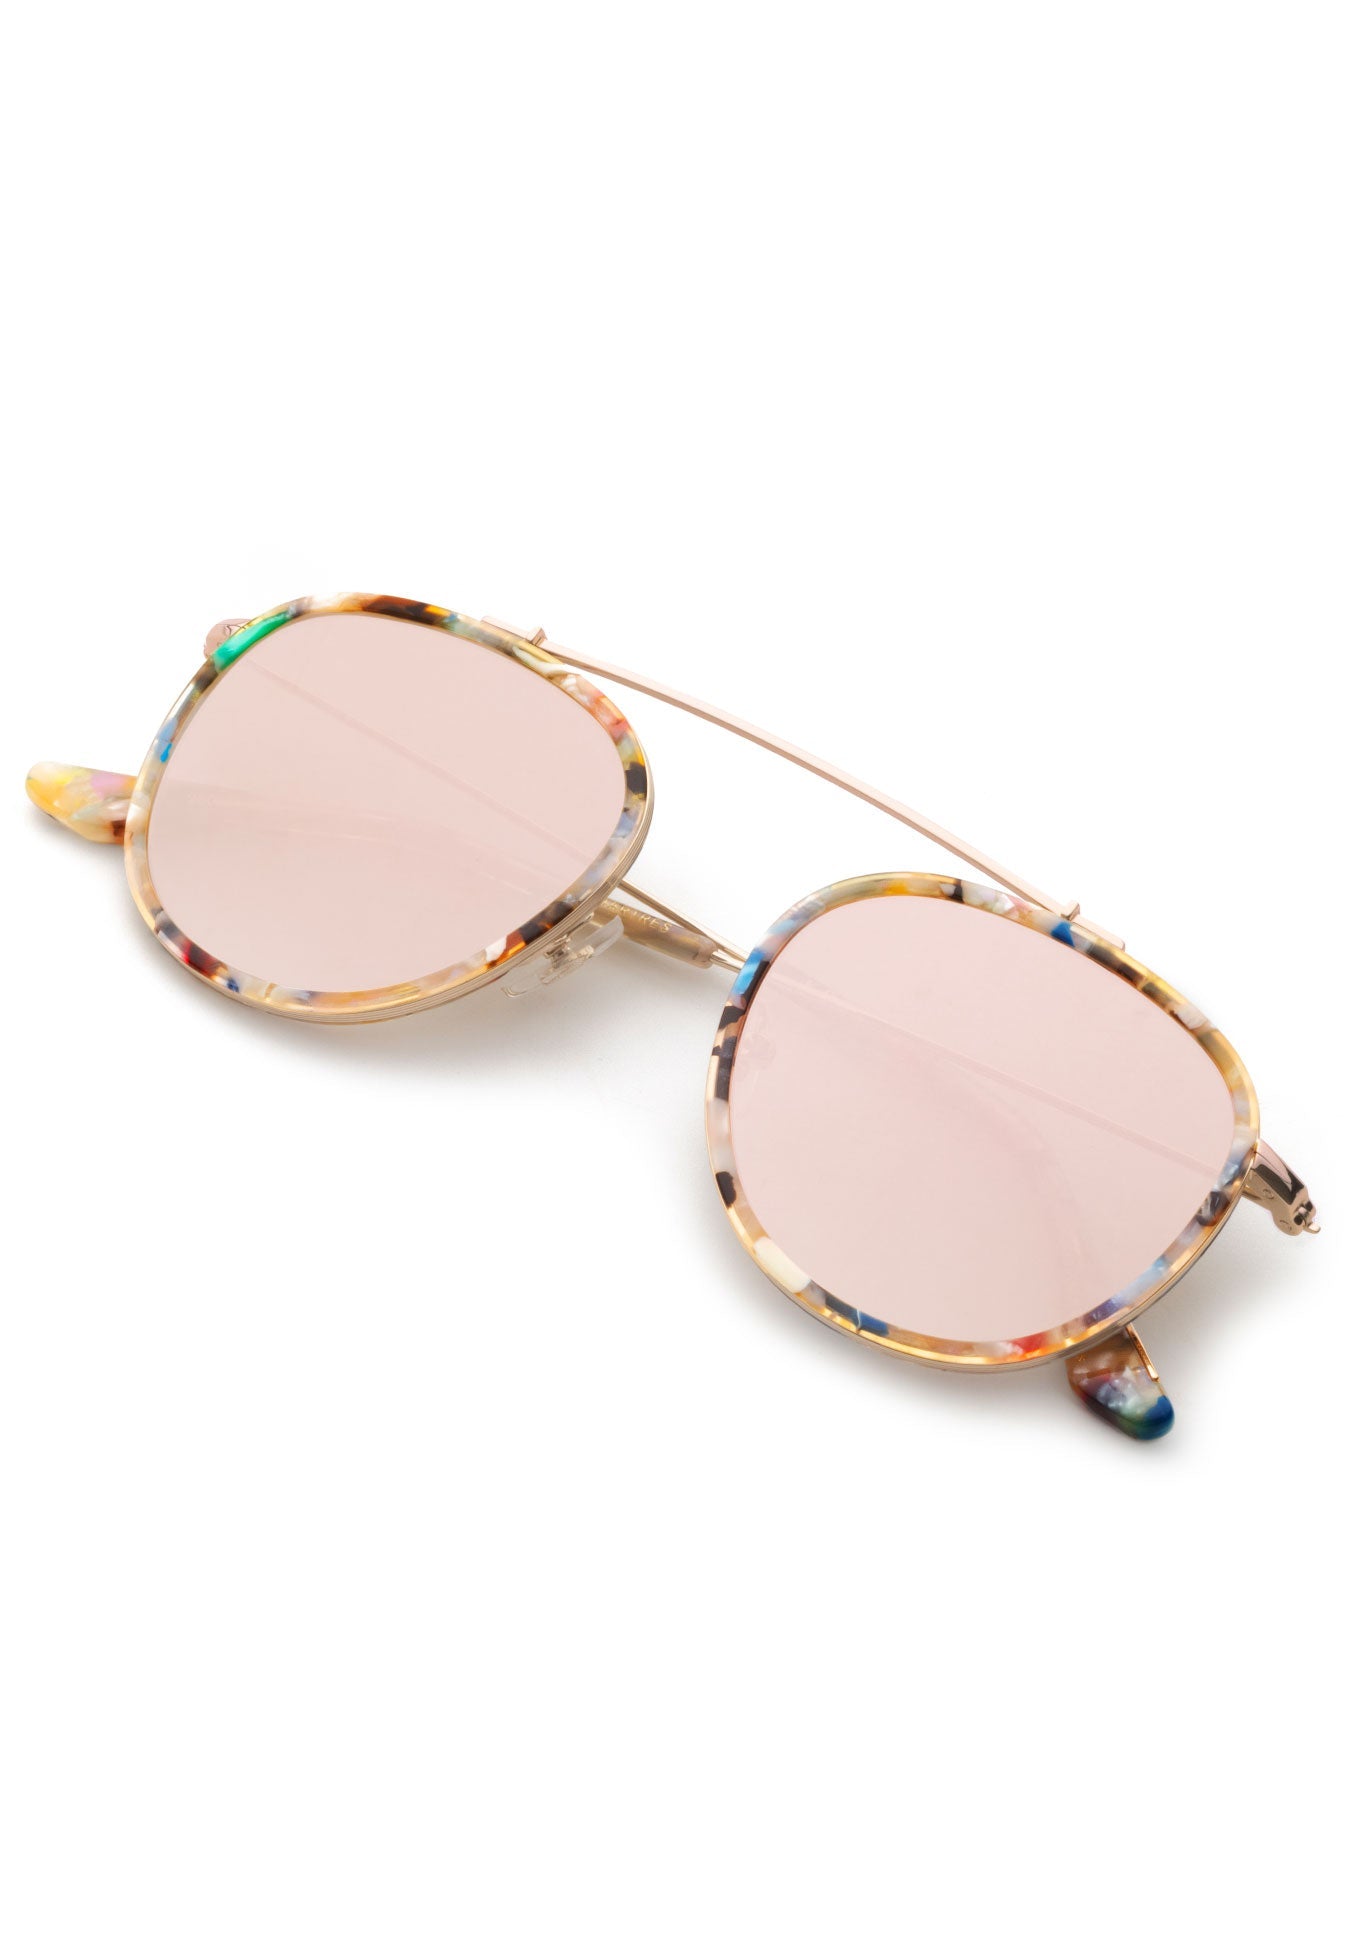 KREWE - CHARTRES | Gelato 18K Rose Mirrored Handcrafted, luxury multicolored acetate aviator sunglasses